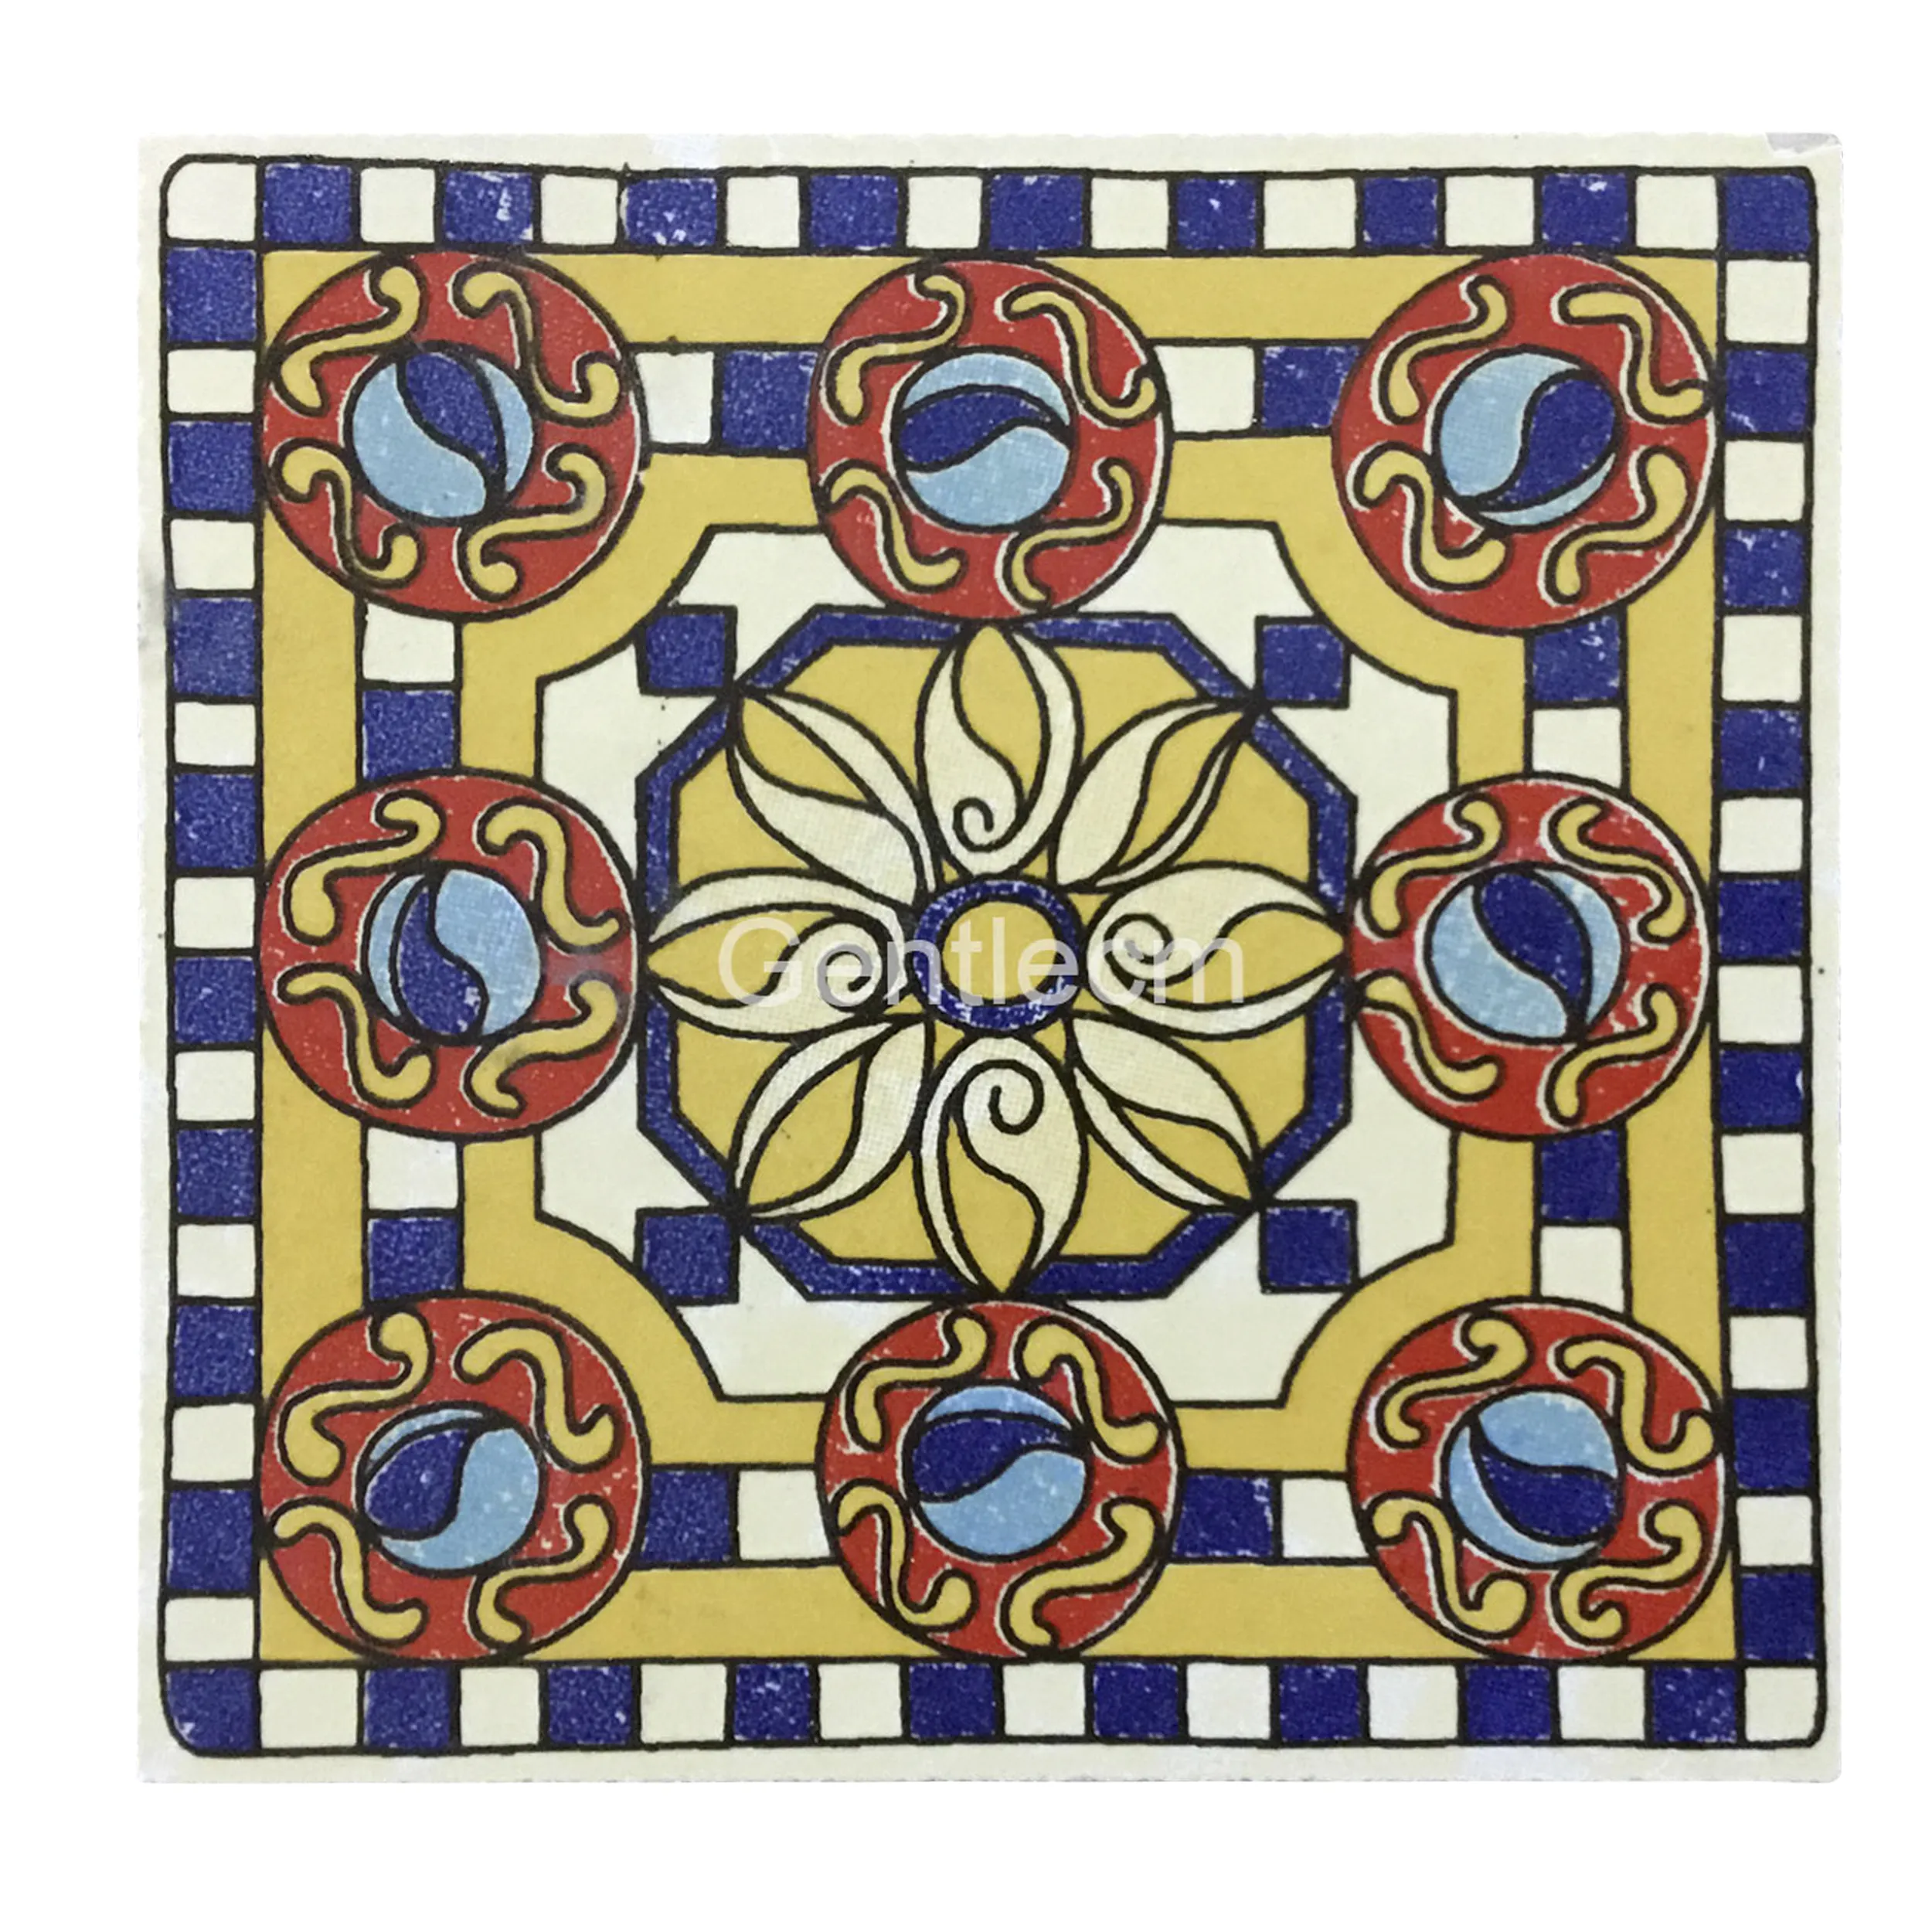 Hand painted antique pattern 100x100mm living room decorative tiles wall tile floor ceramic art tiles